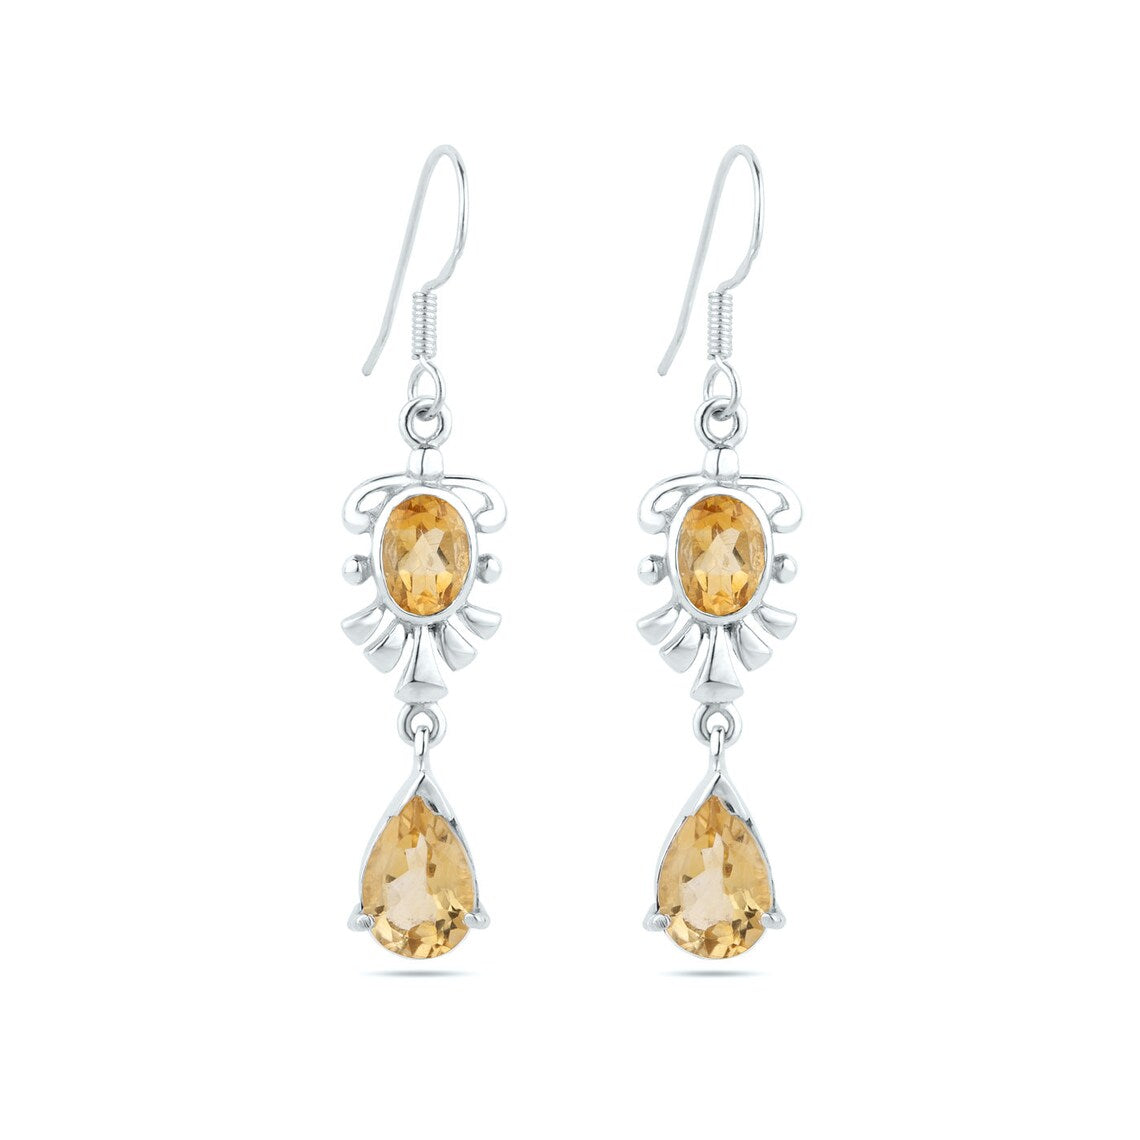 Citrine Gemstone Earrings - Citrine sterling silver earrings - hook Earrings - faceted citrine earrings - Yellow Citrine Earrings